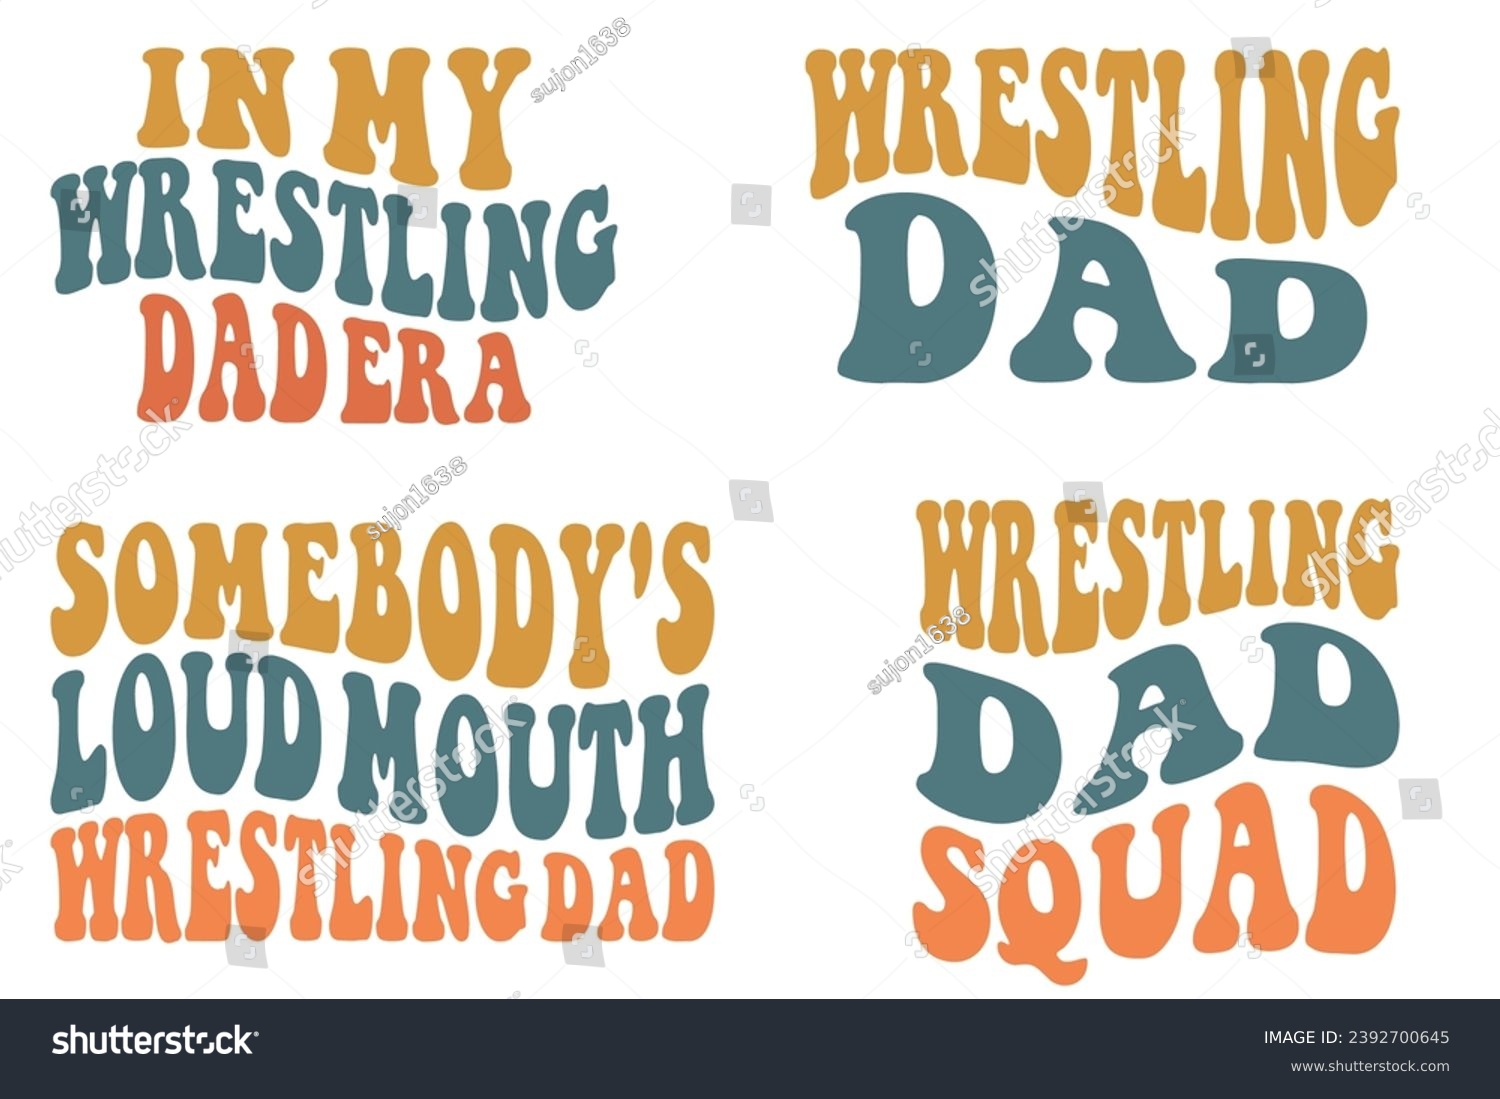 SVG of  In My Wrestling dad Era, Wrestling dad, Somebody's Loud Mouth Wrestling dad, Wrestling dad Squad retro wavy T-shirt designs svg